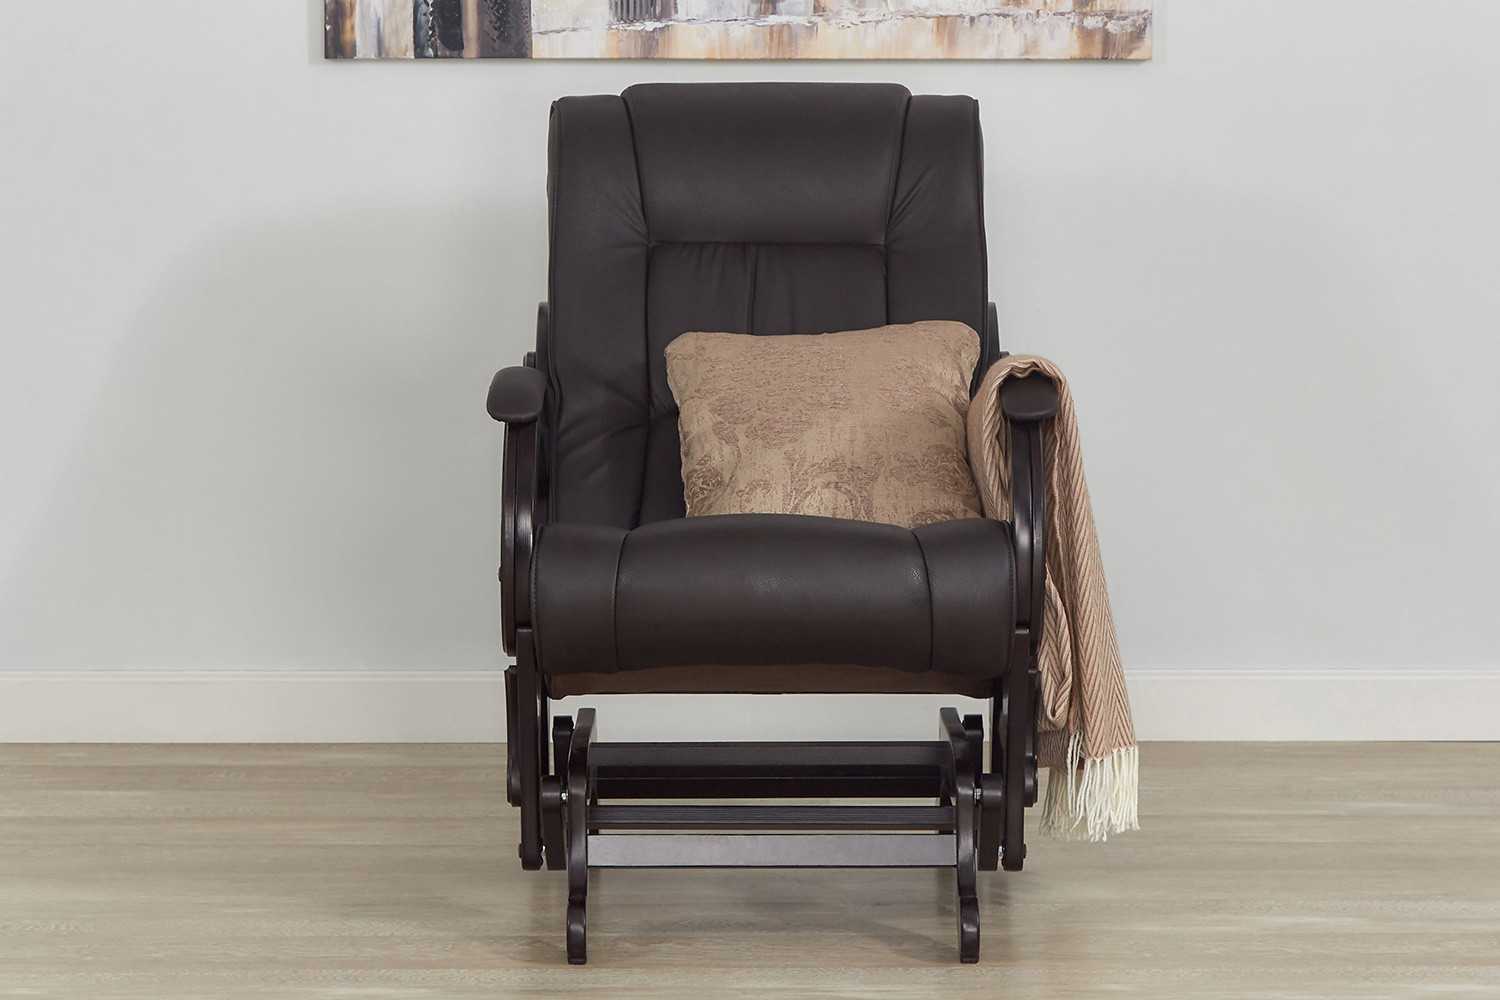 Кресло-глайдер кресло-качалка глайдер комфорт модель 68